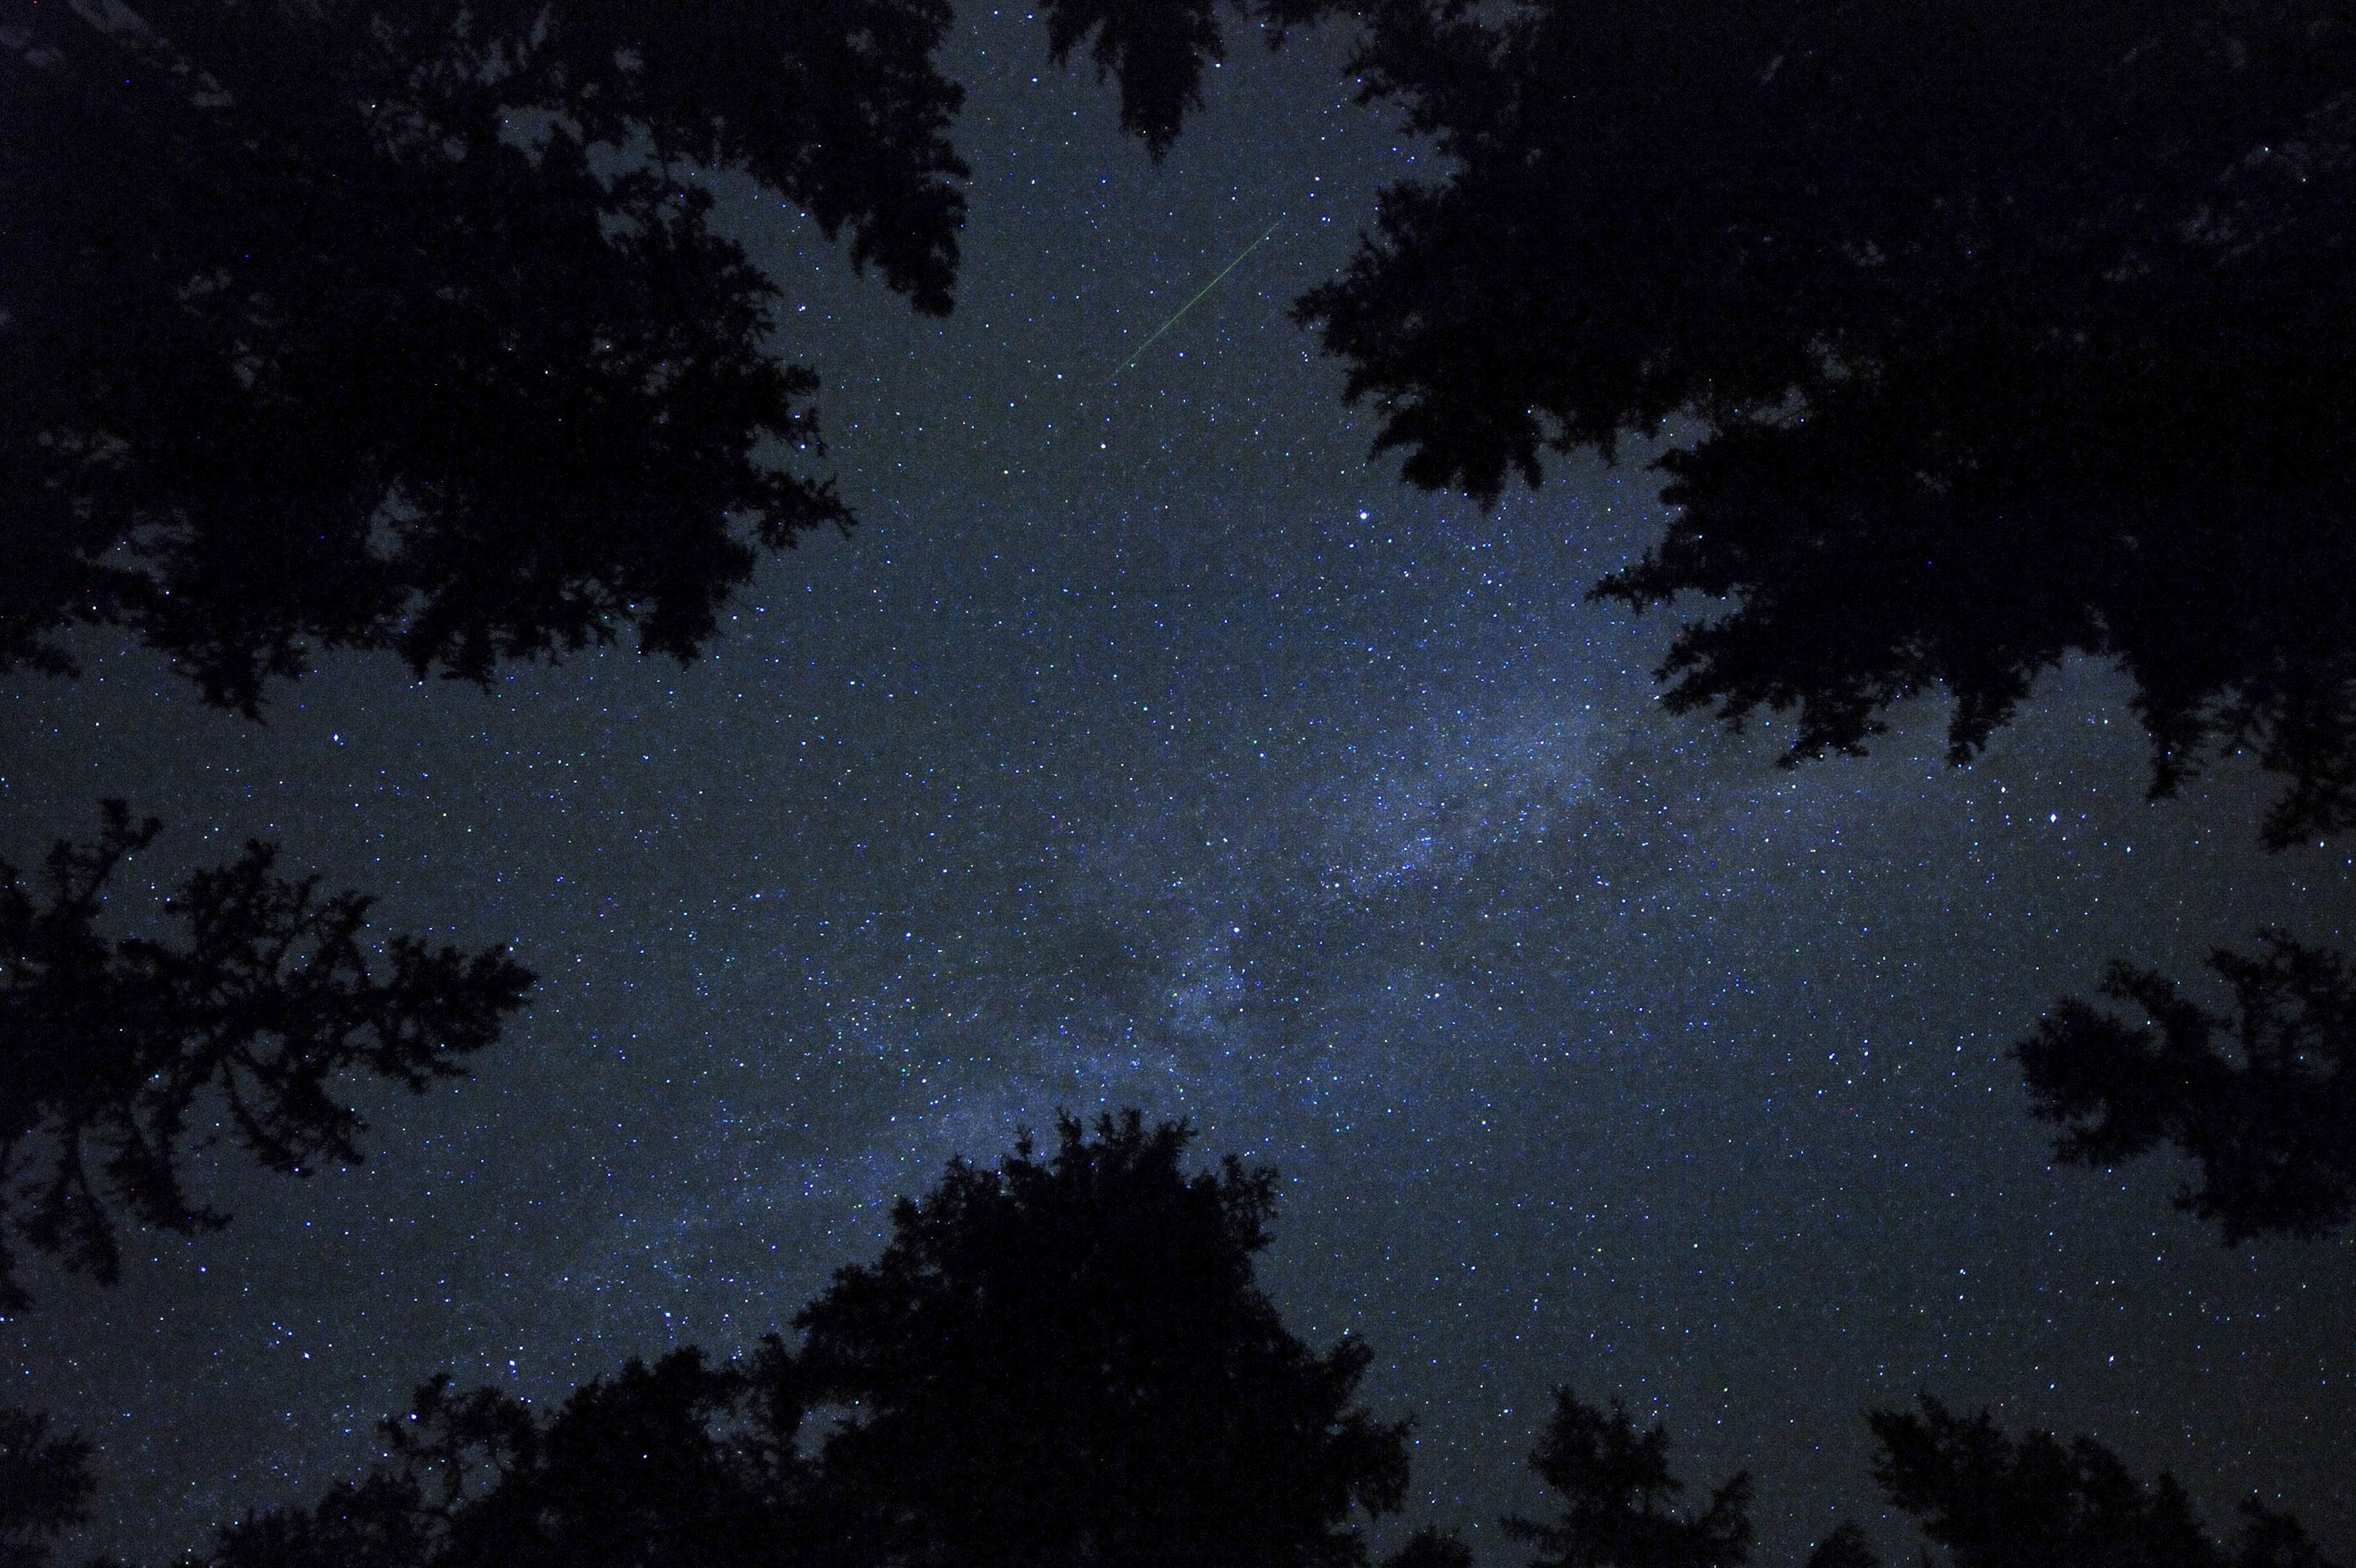 The Perseid meteor shower over Rogla, Slovenia on Aug. 13, 2015.